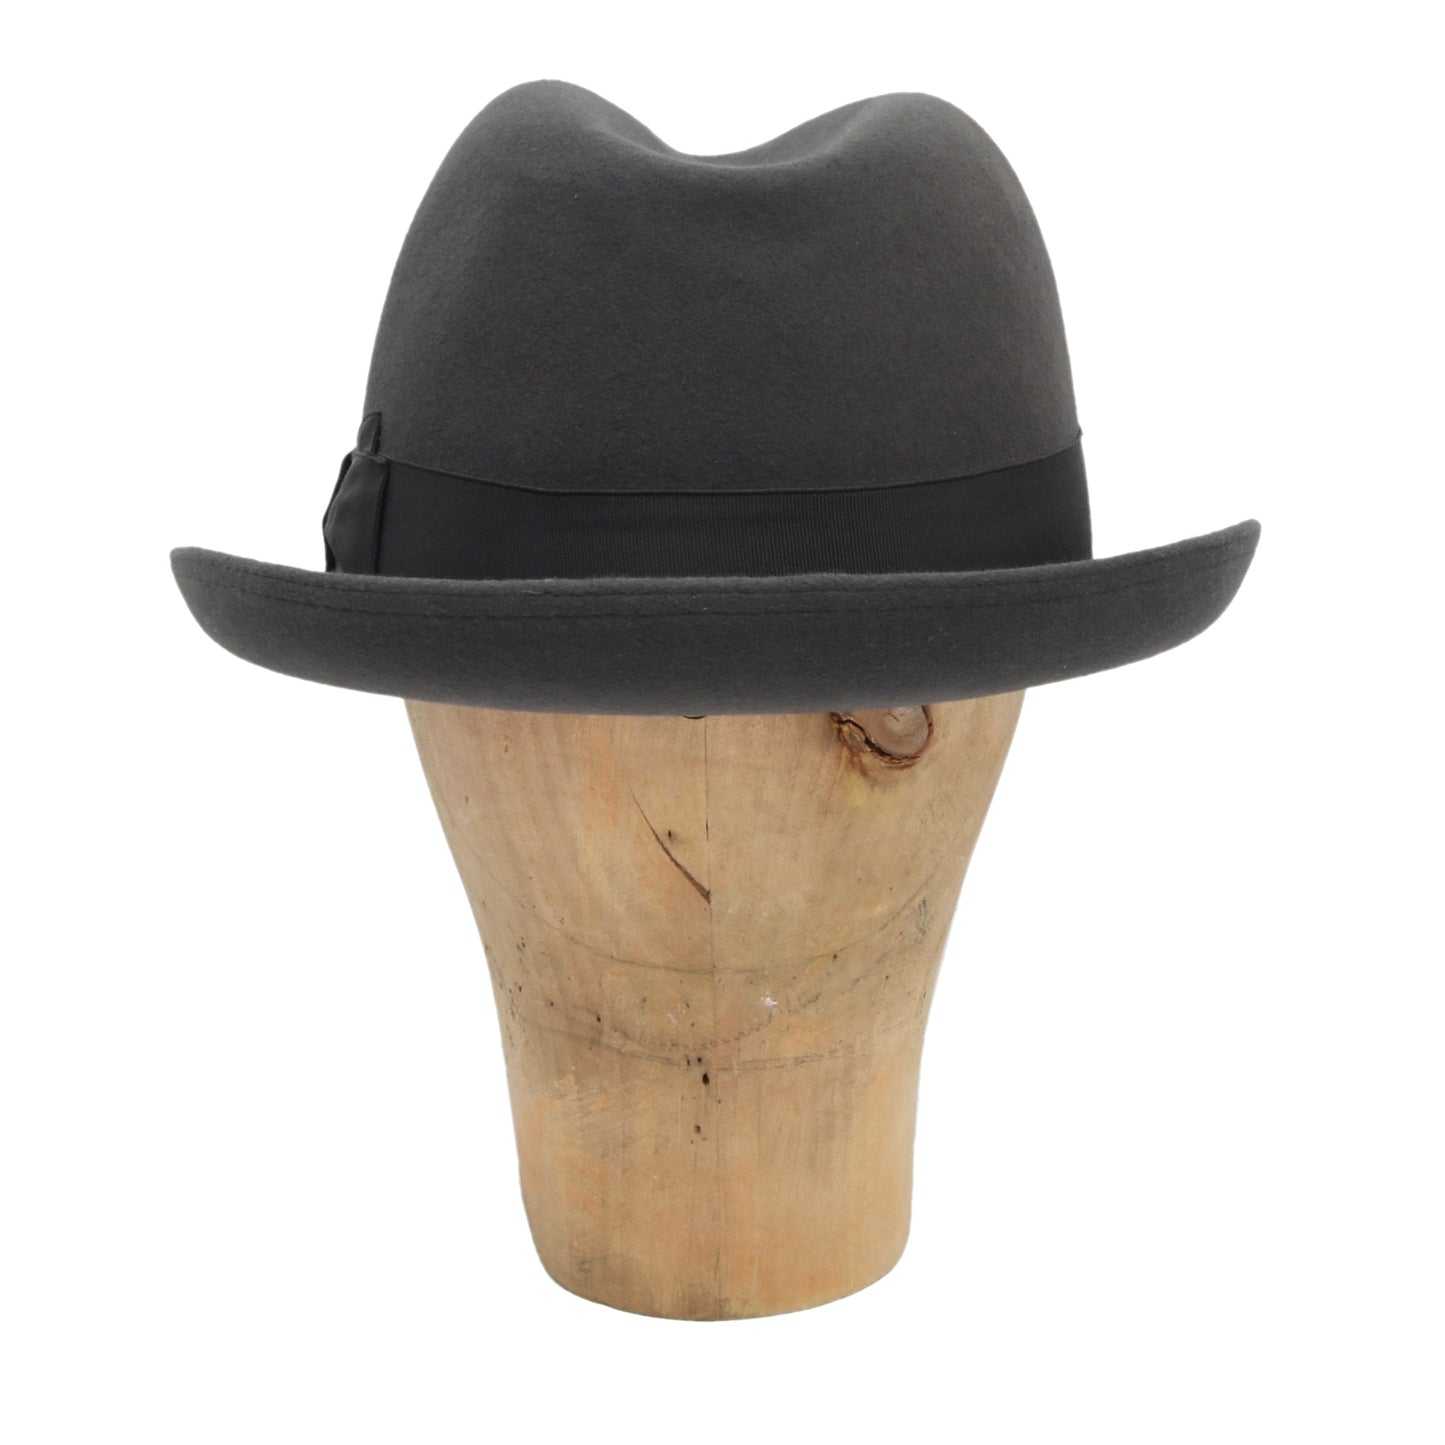 Vintage Borsalino Hat Size 58 - Grey